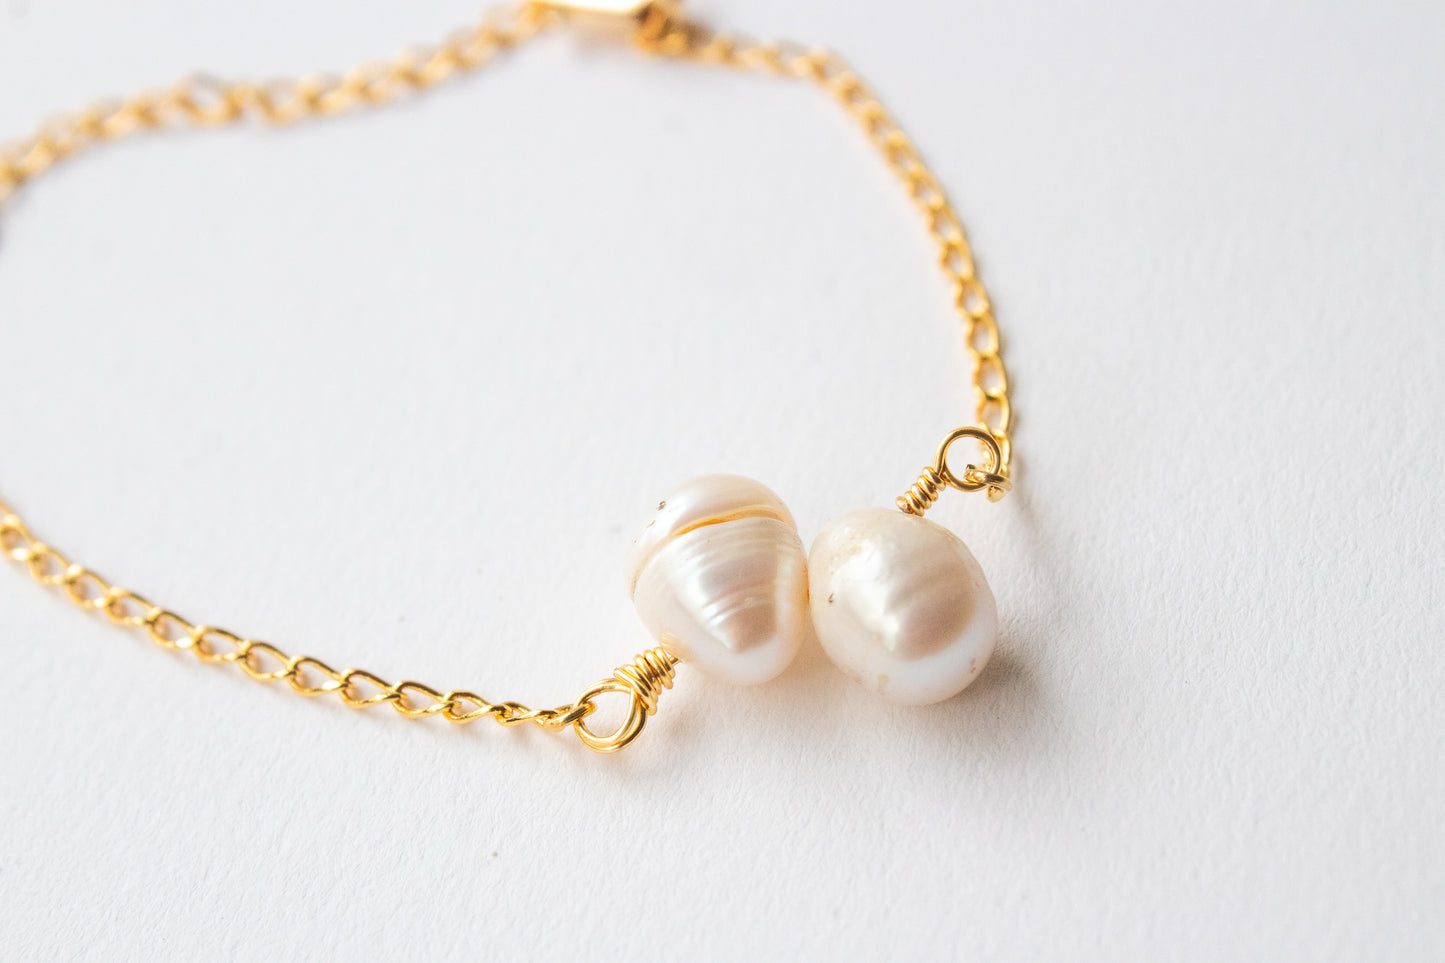 Veryal. Bracelet with white pearl